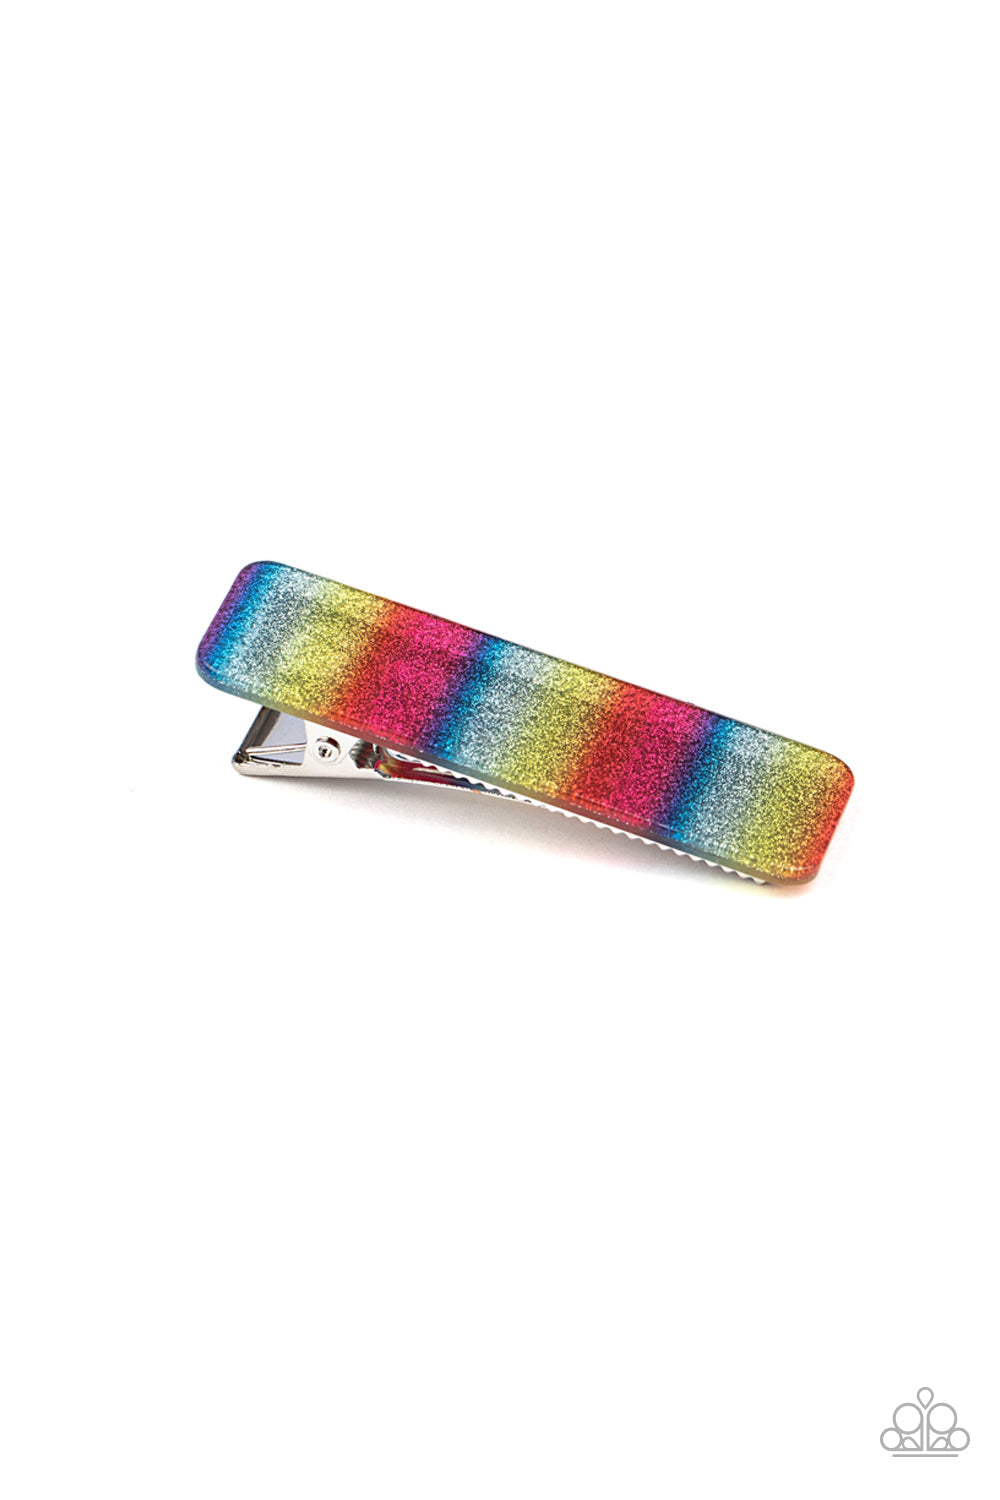 Paparazzi Stellar Rainbows - Multi - Sparkle Streaks of Red, Yellow, Blue, Purple & Pink - Hair Clip - $5 Jewelry with Ashley Swint